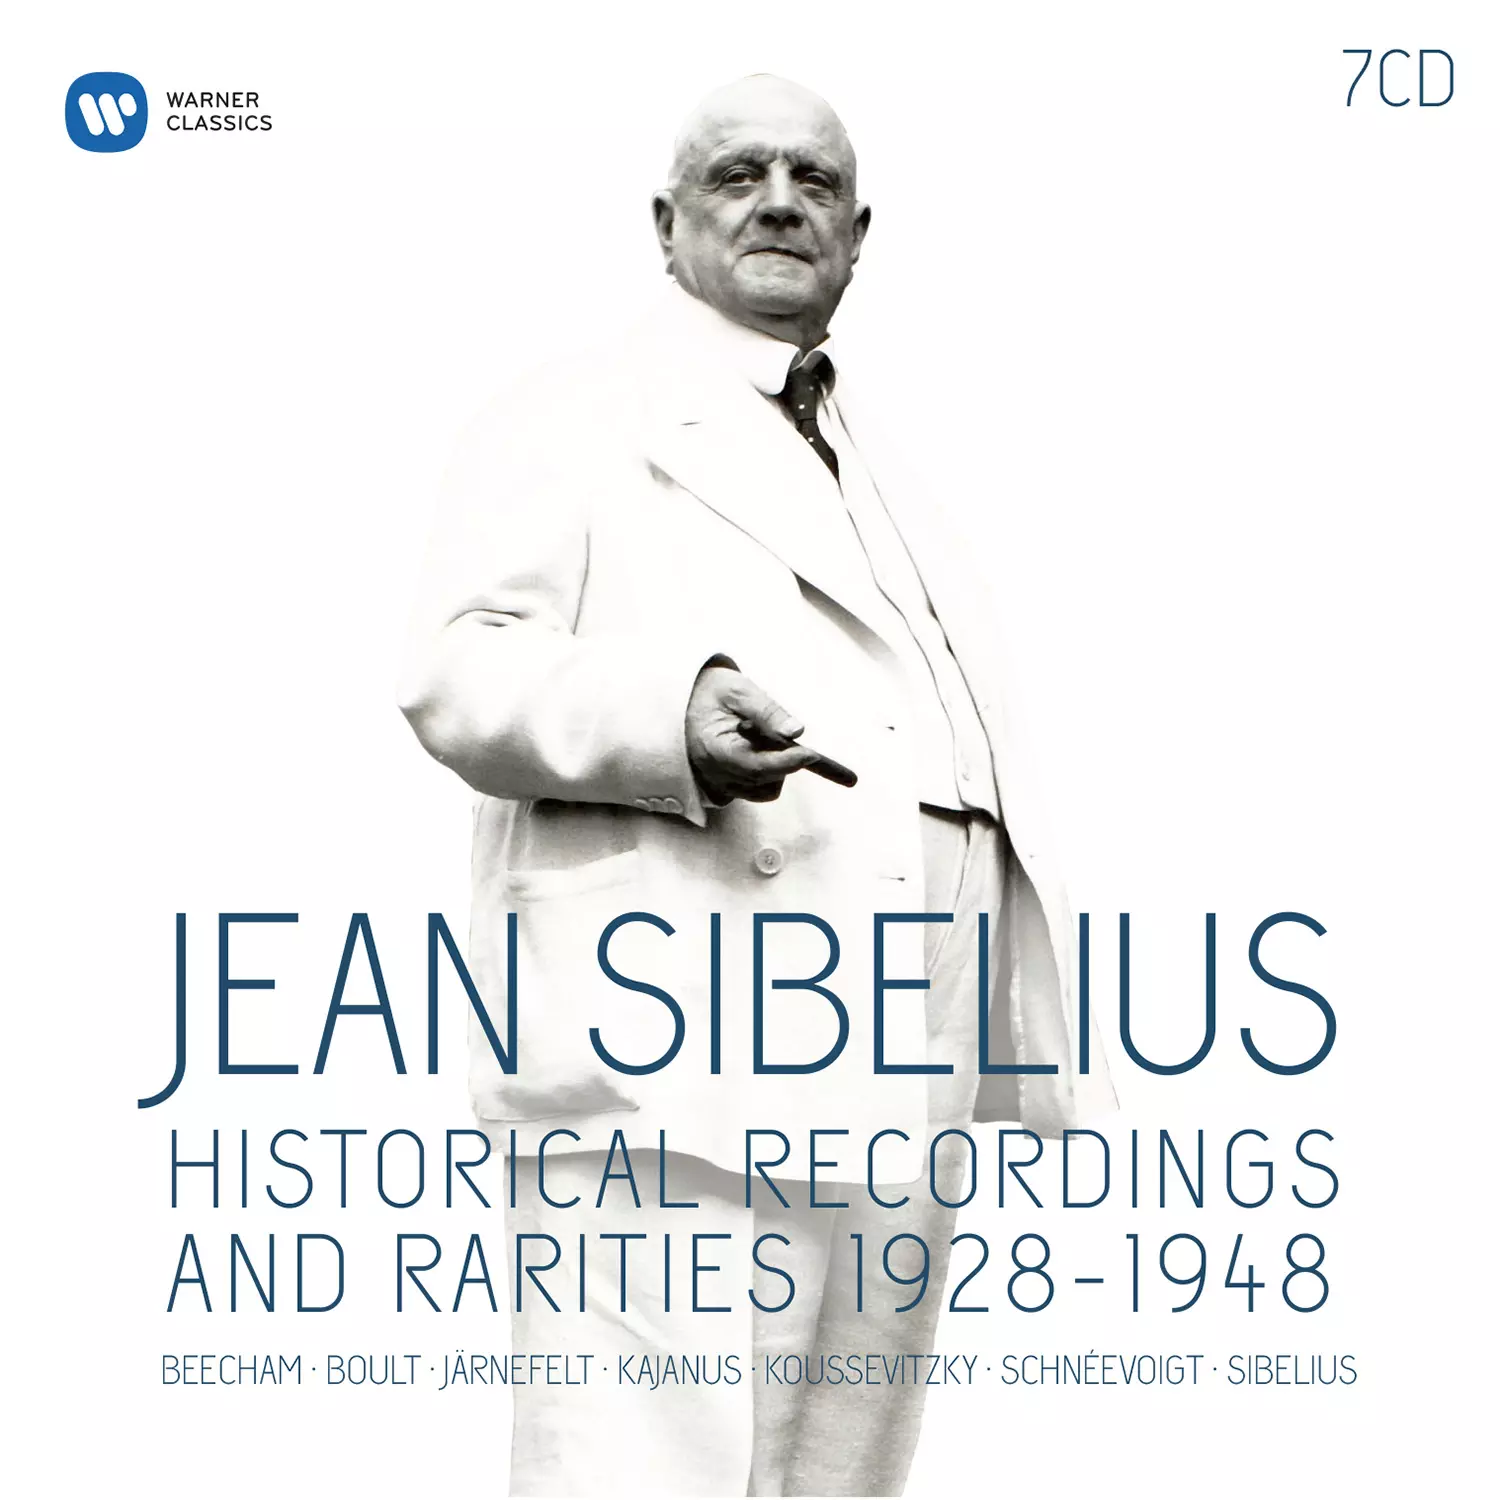 The Jean Sibelius Edition - 150th Anniversary